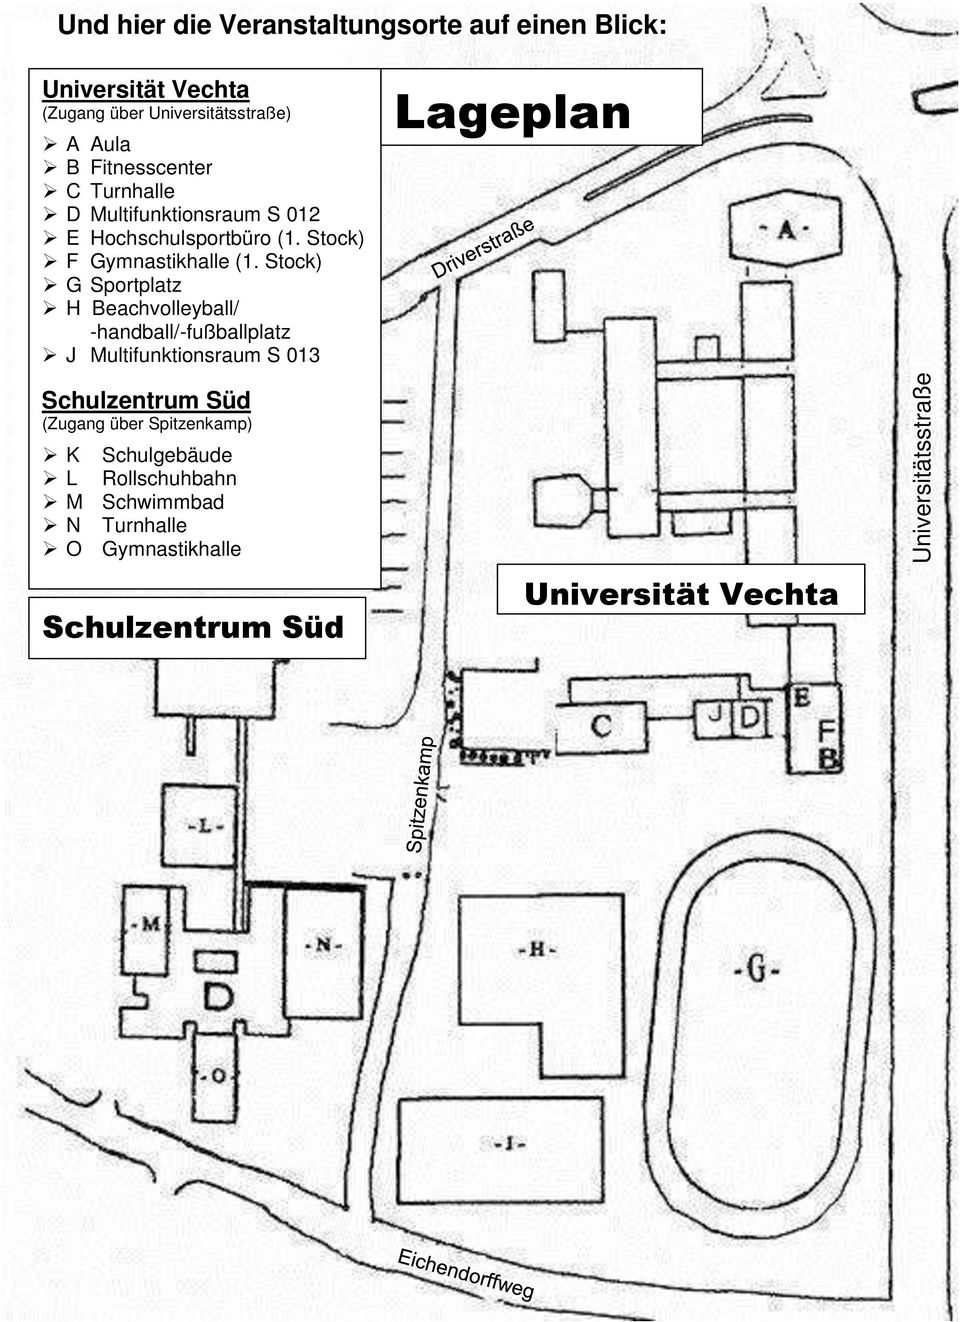 Stock) G Sportplatz H Beachvolleyball/ -handball/-fußballplatz J Multifunktionsraum S 013 Schulzentrum Süd (Zugang über